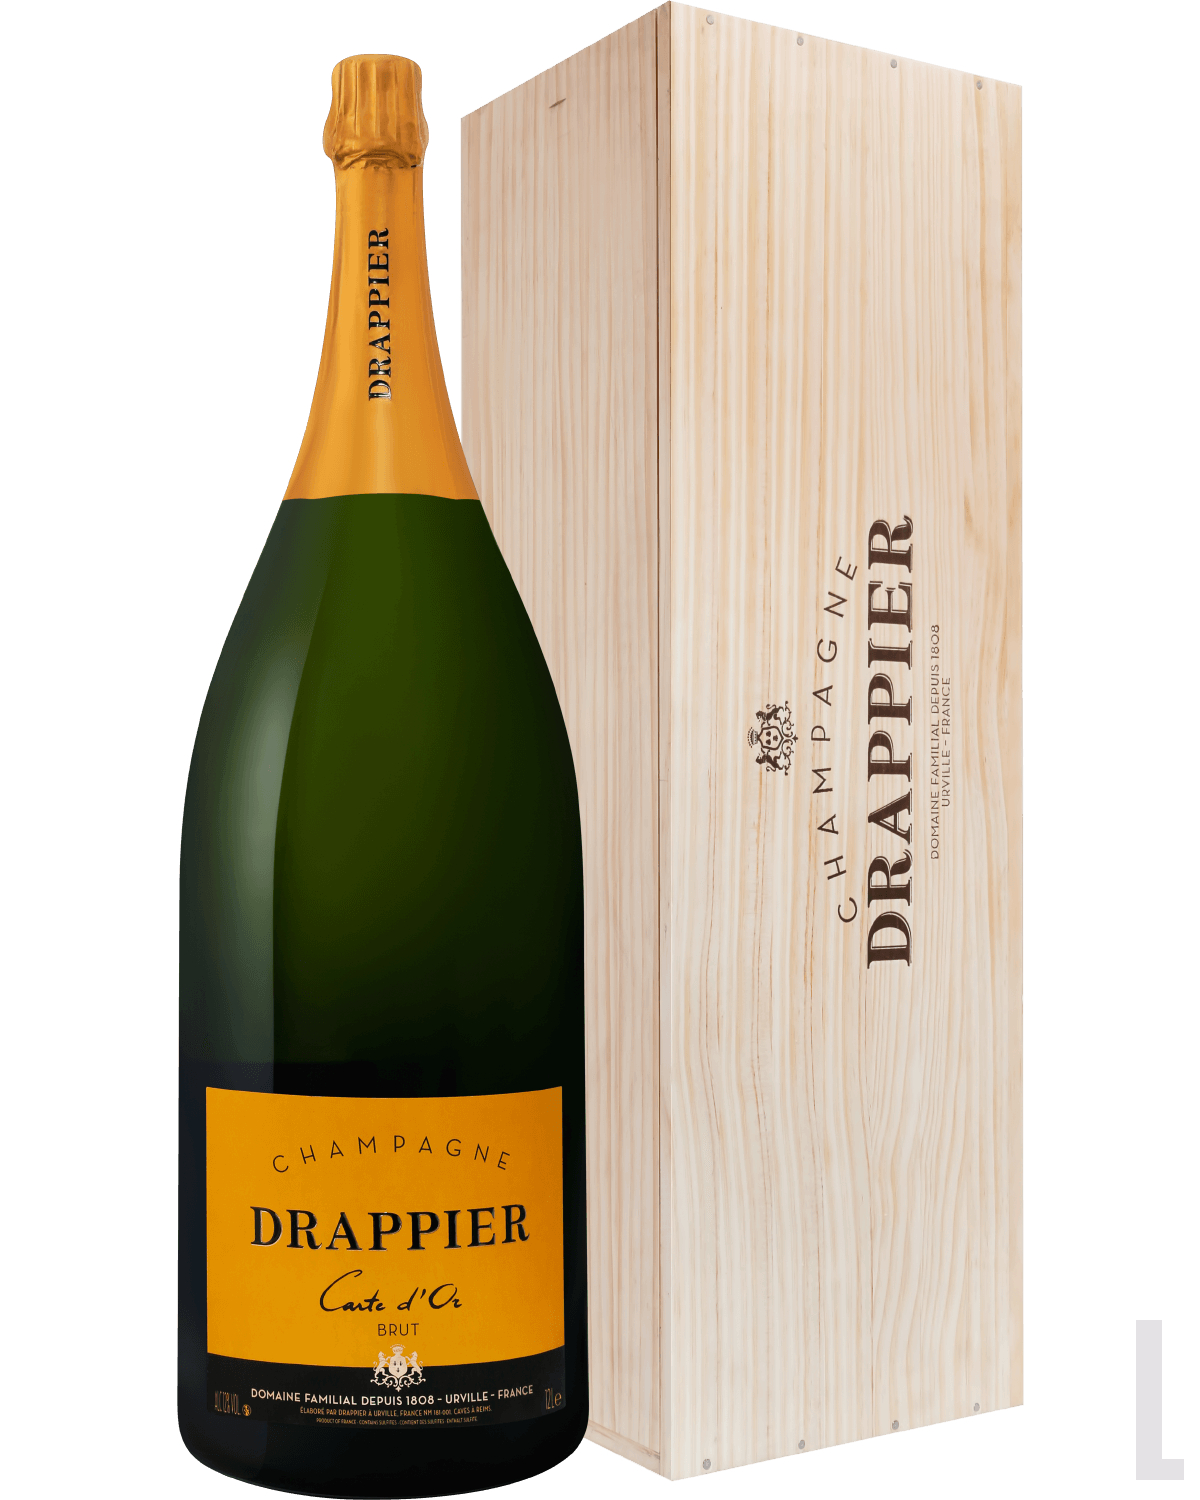 Champagne brut цена. Drappier шампанское Brut. Champagne Drappier, "carte d'or" Brut. Drappier carte d'or шампанское. "Драпье карт д'ор брют шампань АОС Drappier carte d'or Brut Champagne AOC".